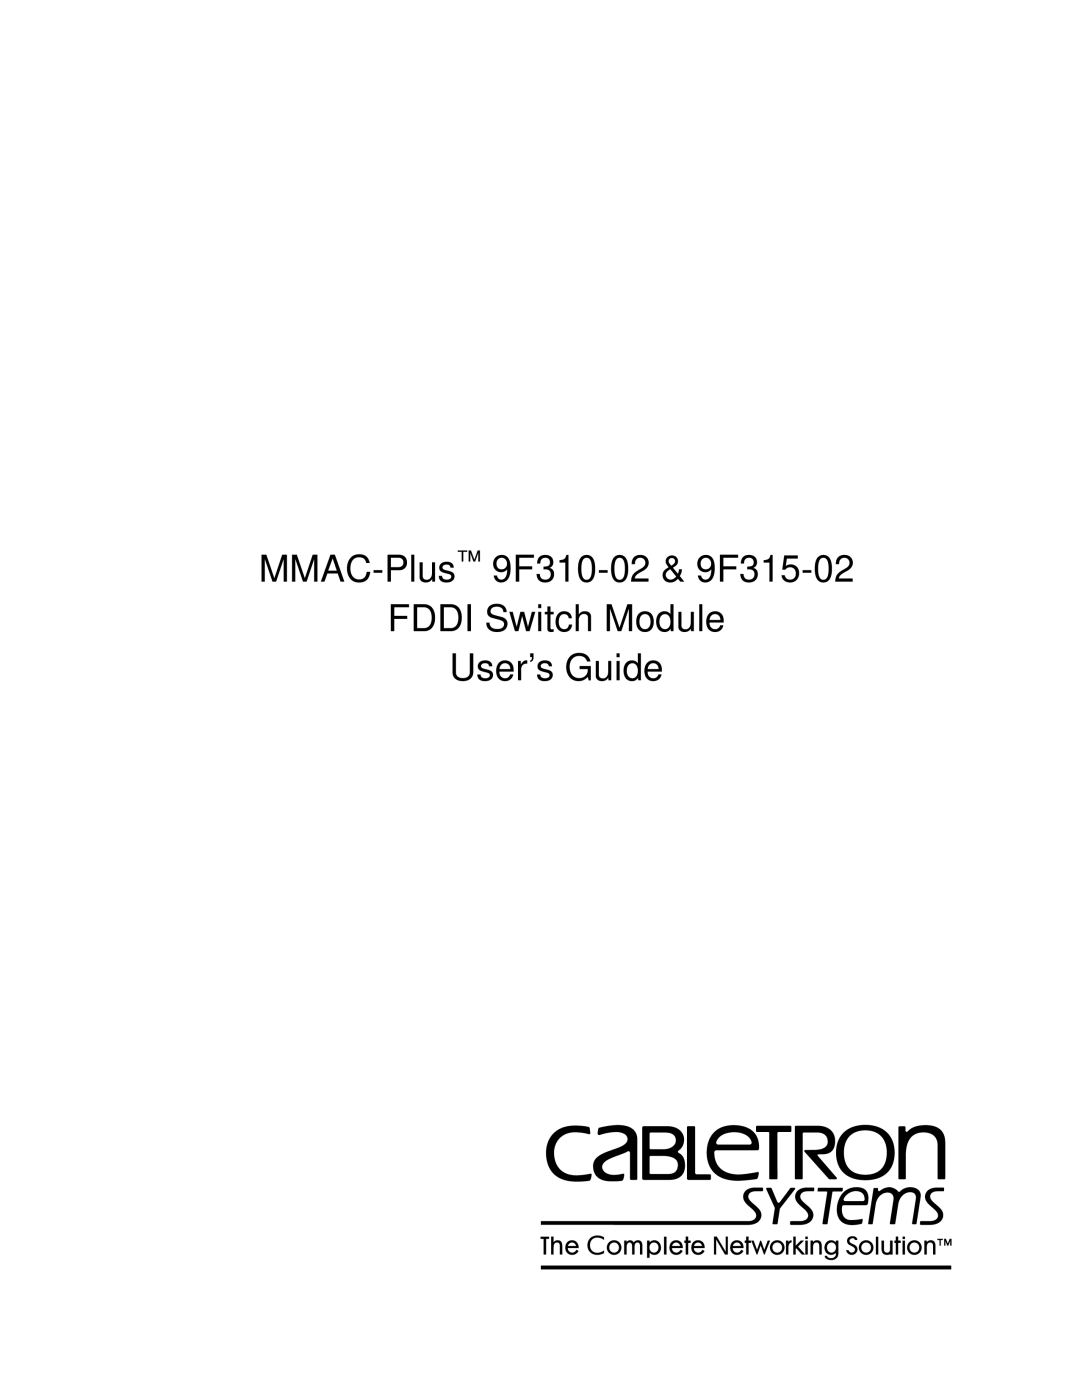 Cabletron Systems manual MMAC-Plus 9F310-02 & 9F315-02, FDDI Switch Module User’s Guide 